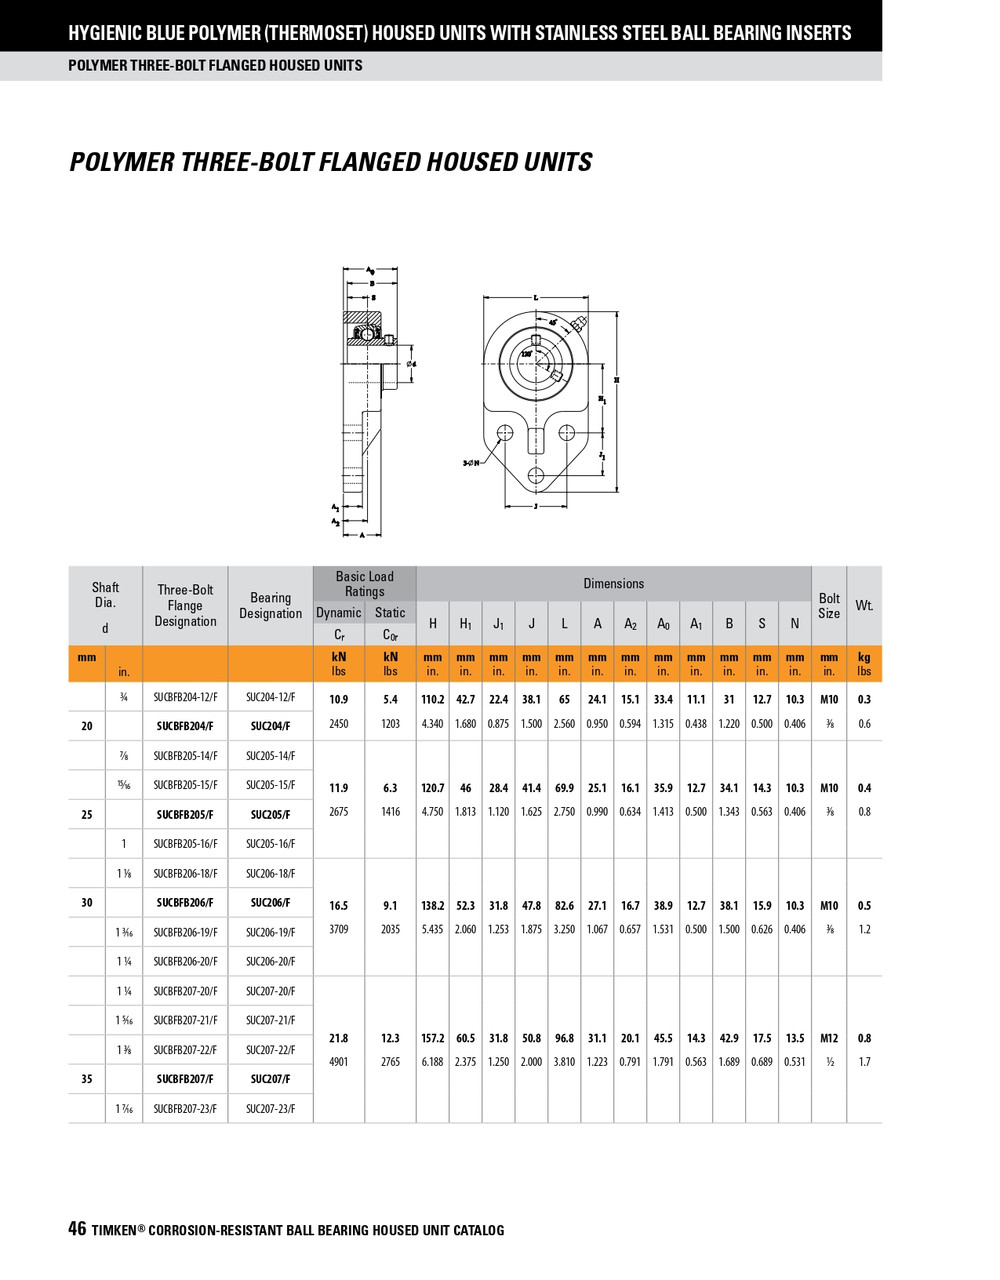 1-11/16" Hygienic Polymer Set Screw Three-Bolt Flange Block Assembly   SUCBFB209-27/FVSL613